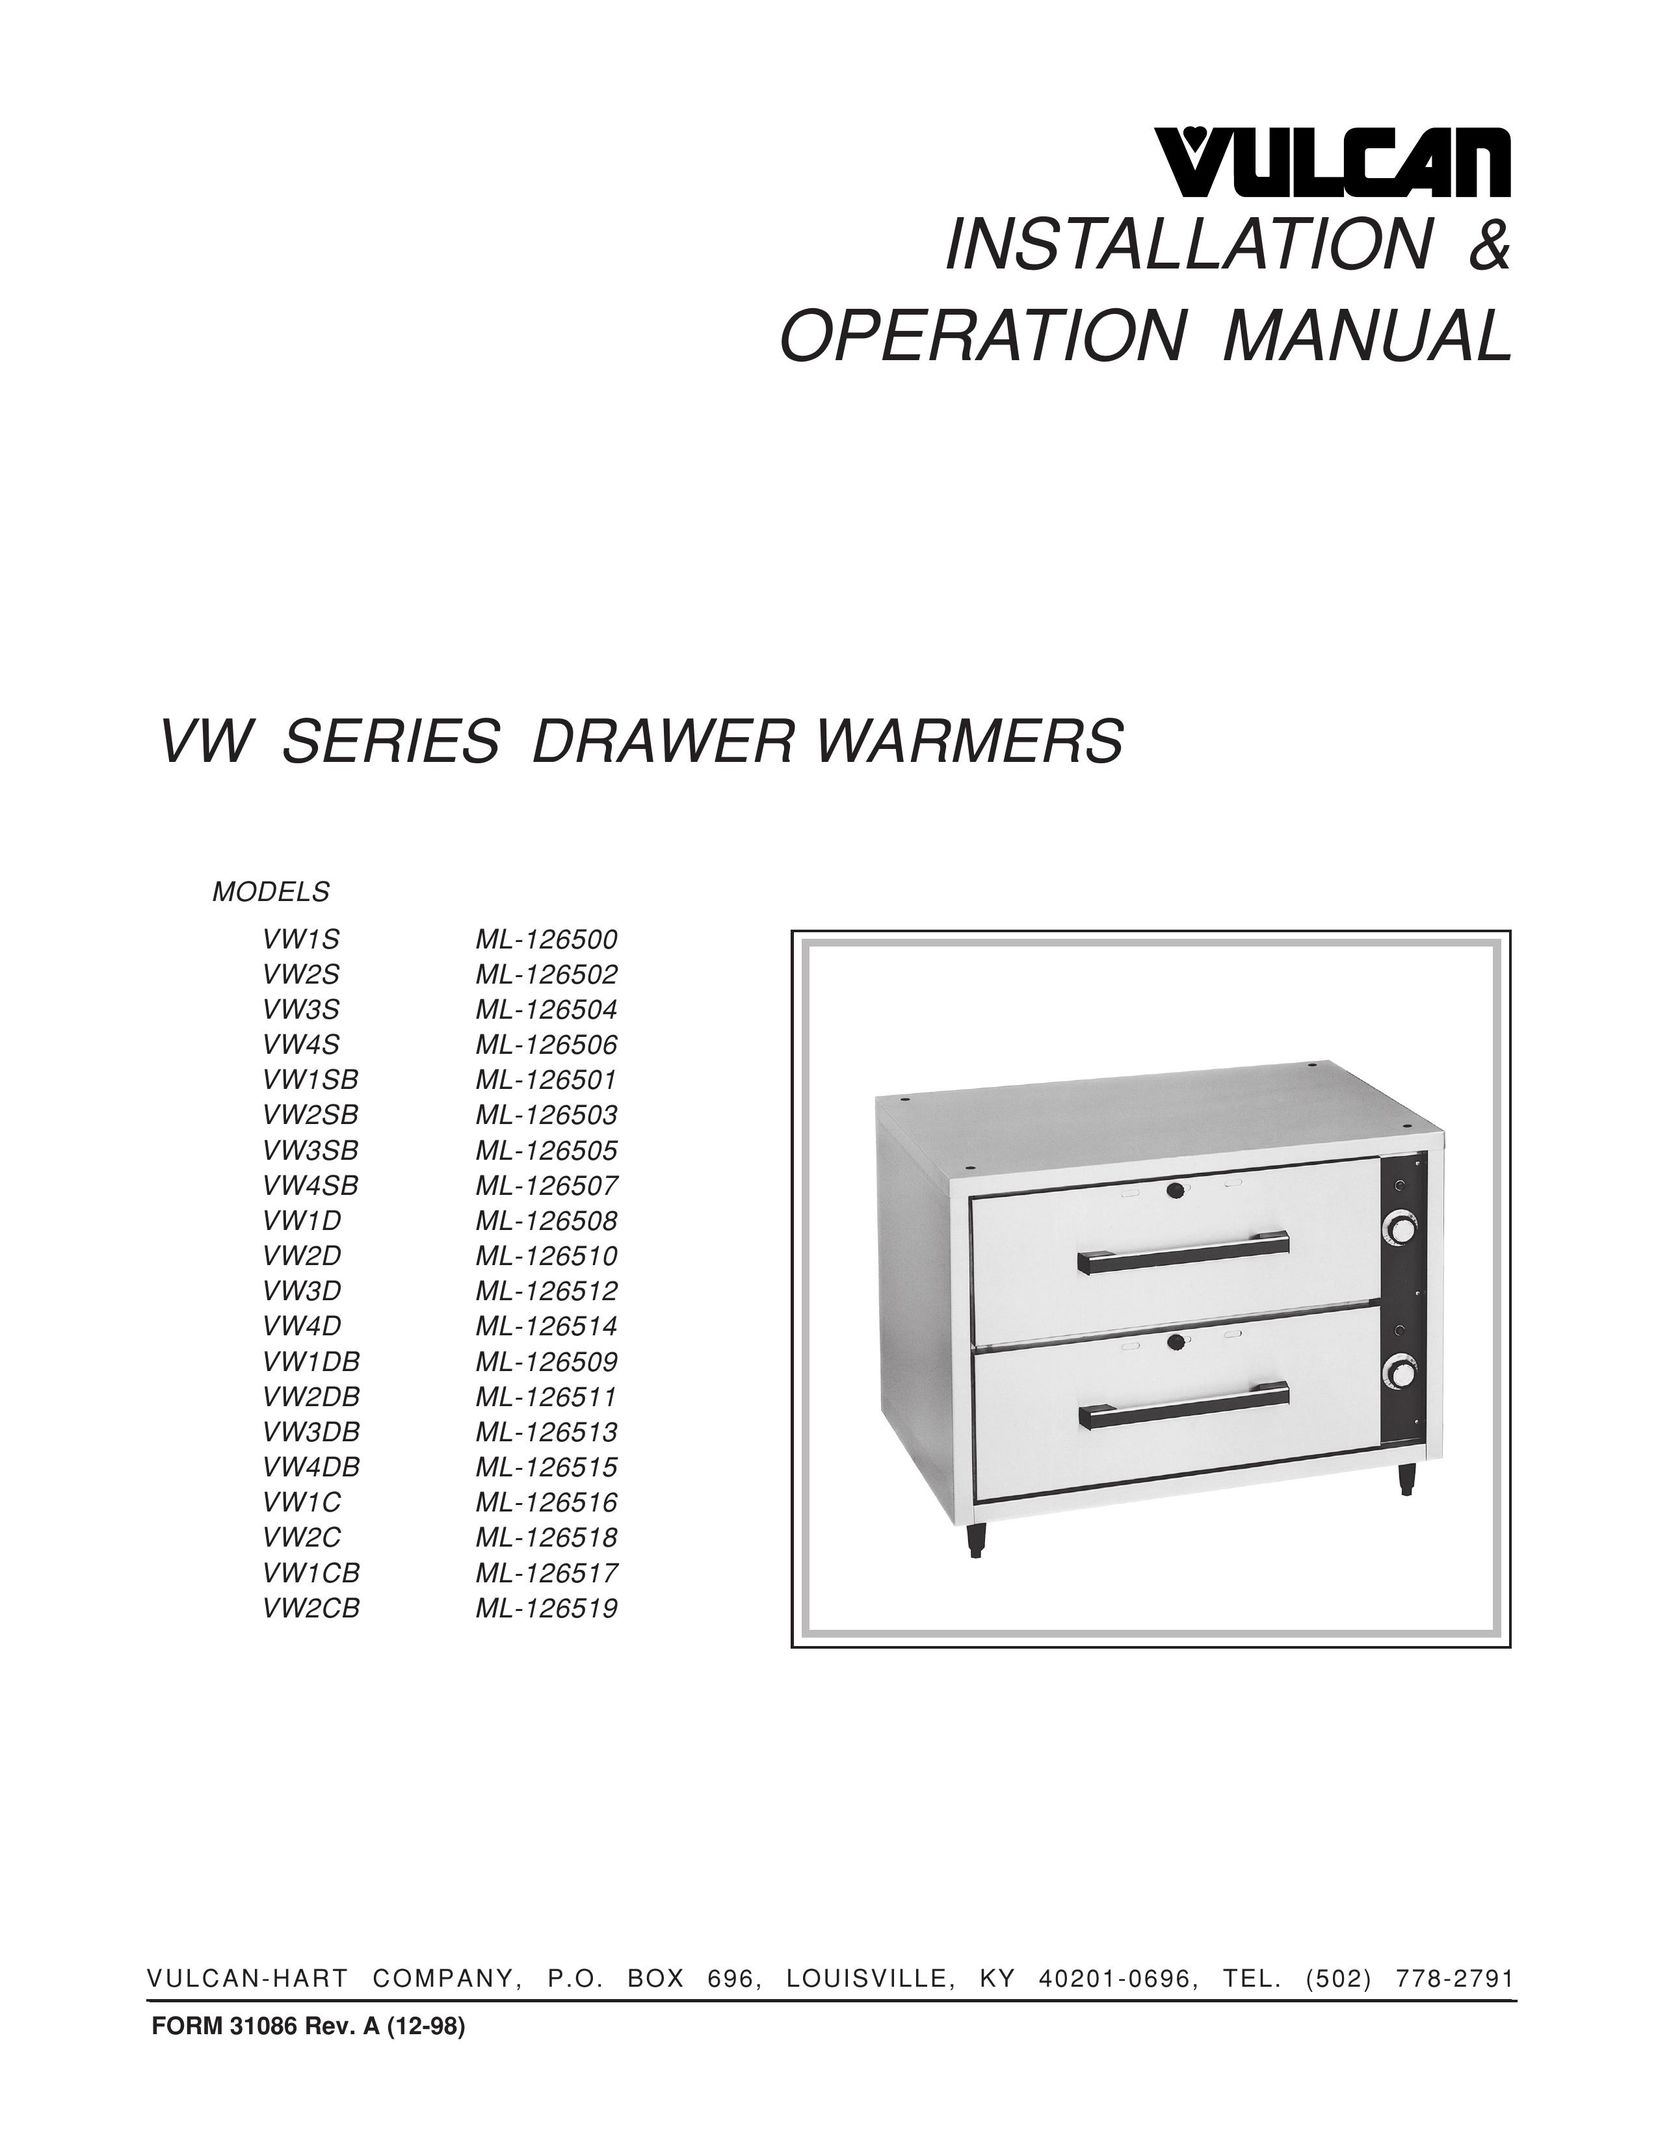 Vulcan-Hart VW1D ML-126508 Food Warmer User Manual